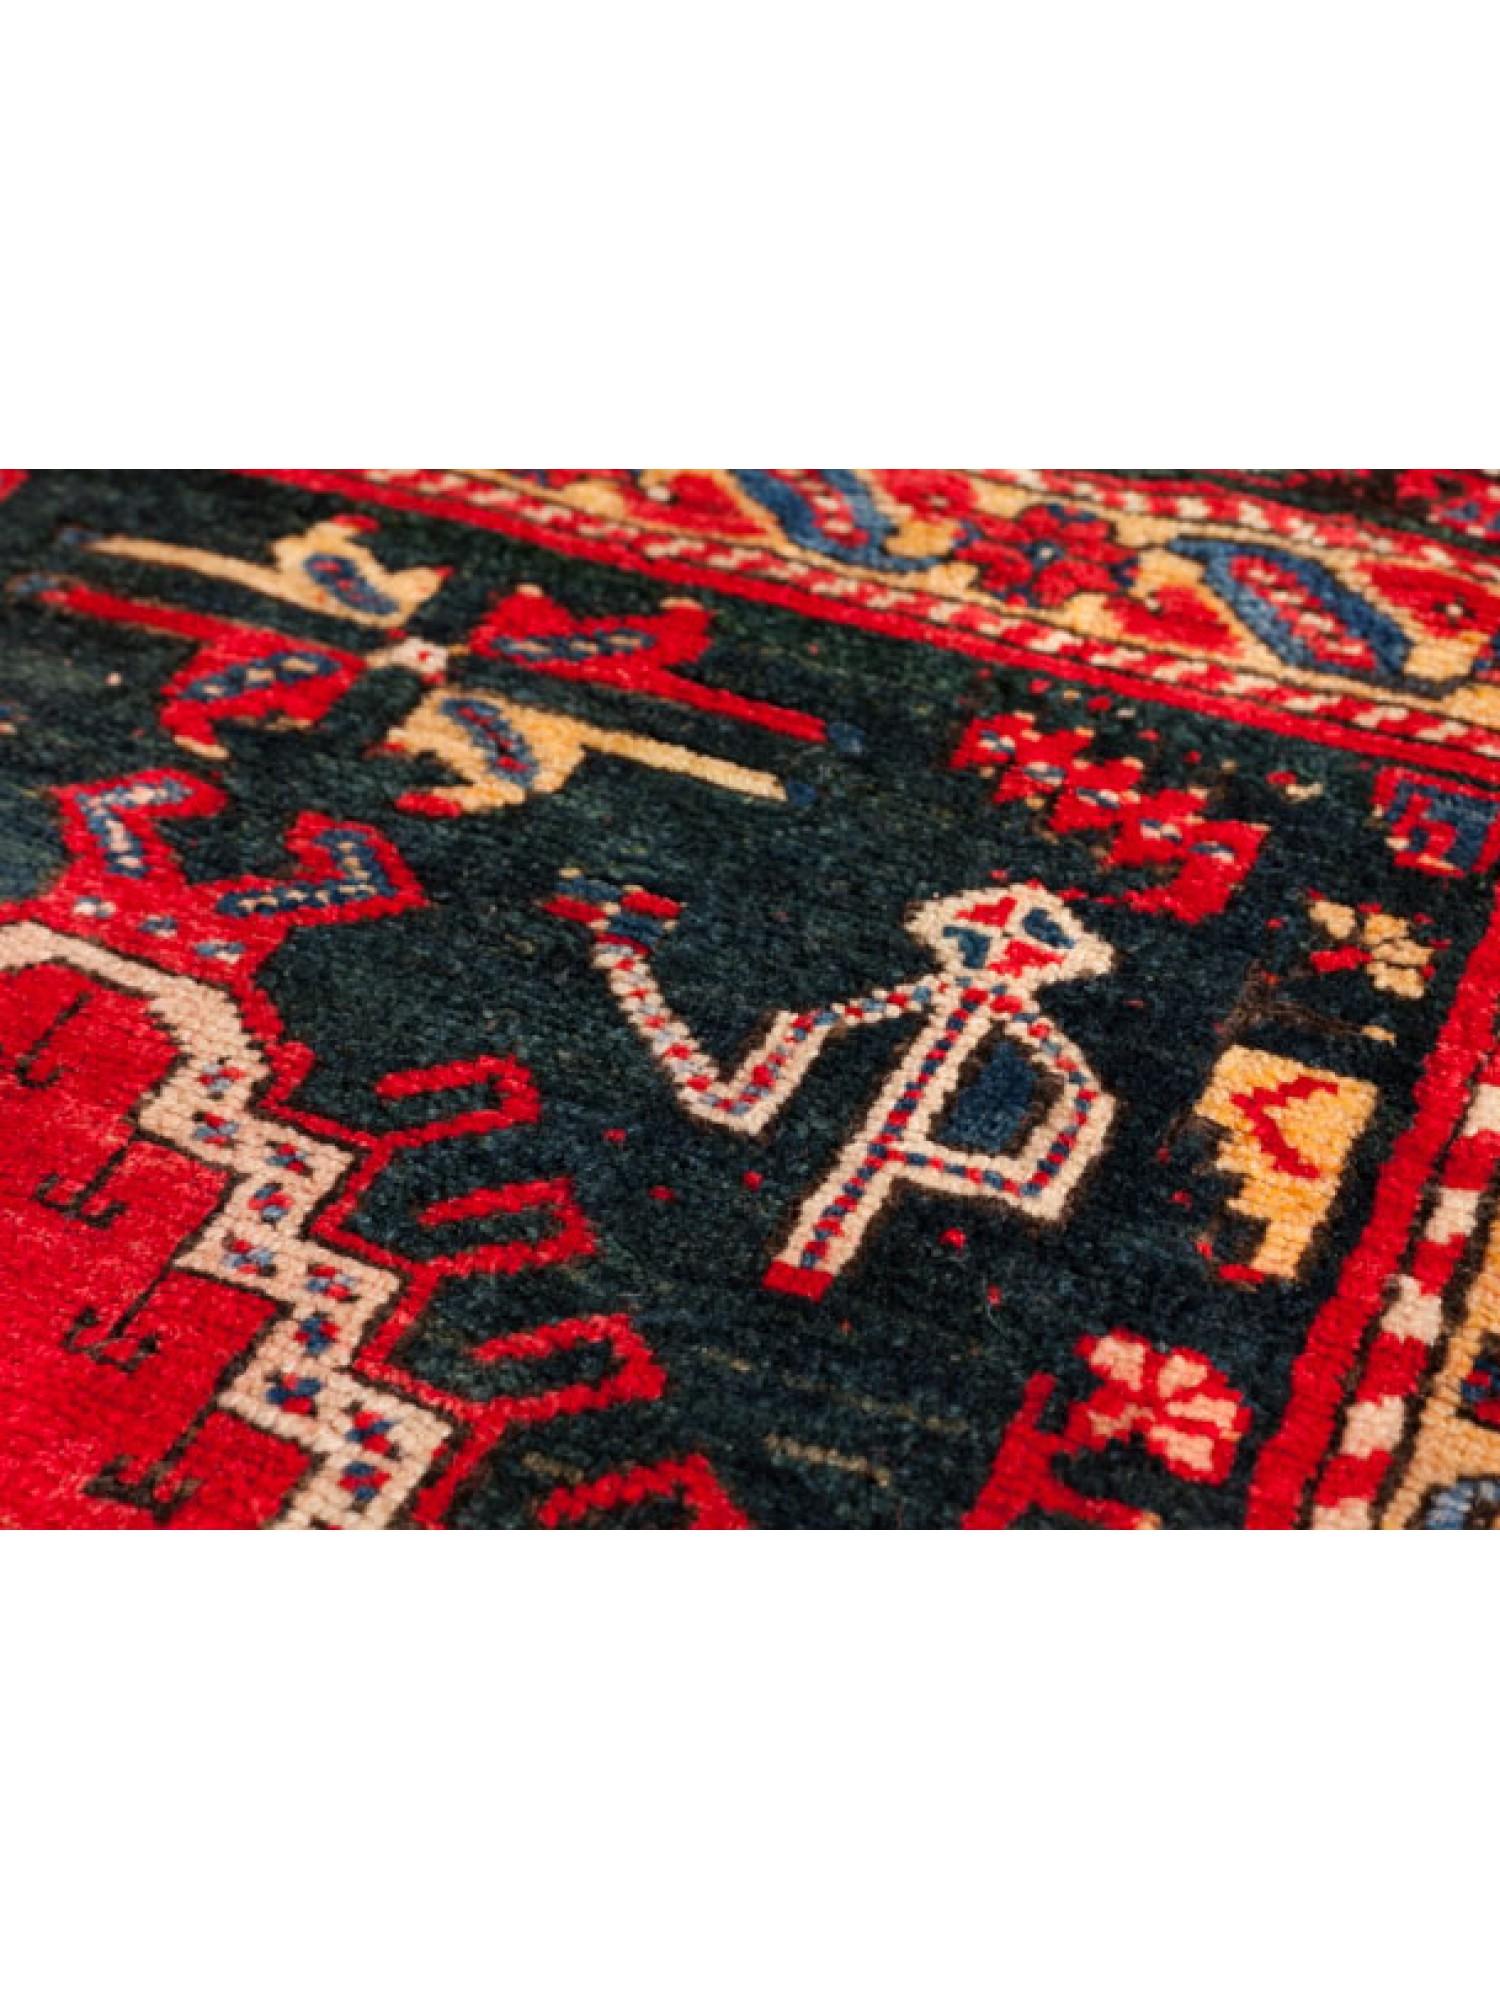 Oushak Antique Ghiordes Prayer Rug Western Anatolian Turkish Mihrab Carpet Rare Design For Sale